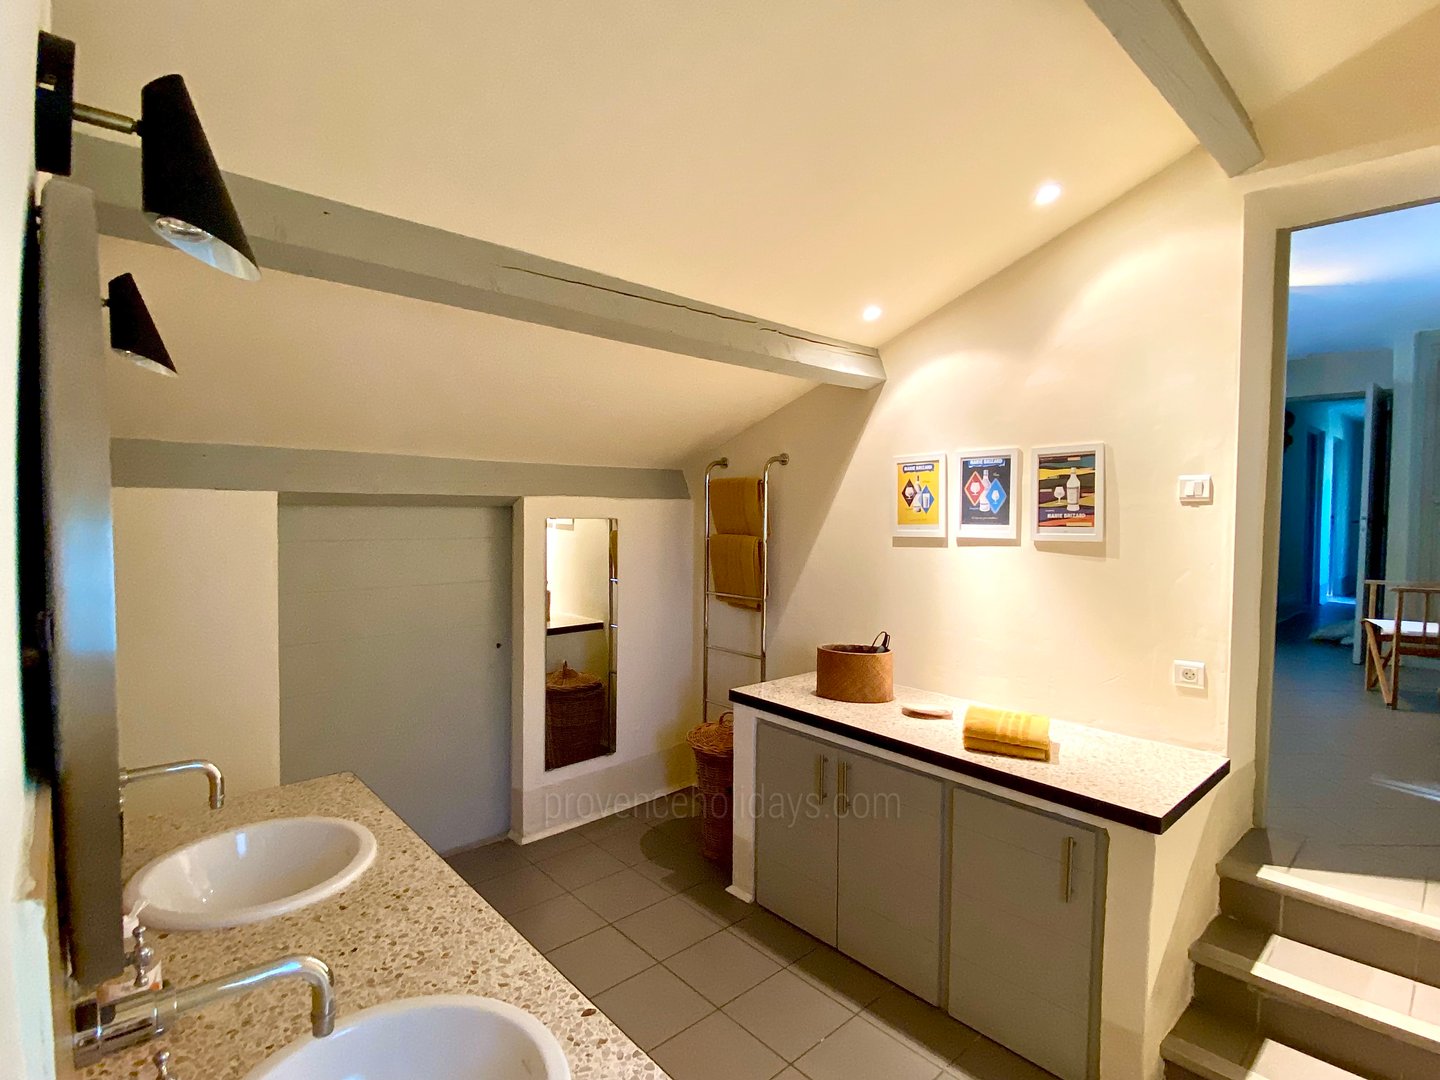 41 - Grand Mas de Cairanne: Villa: Bathroom